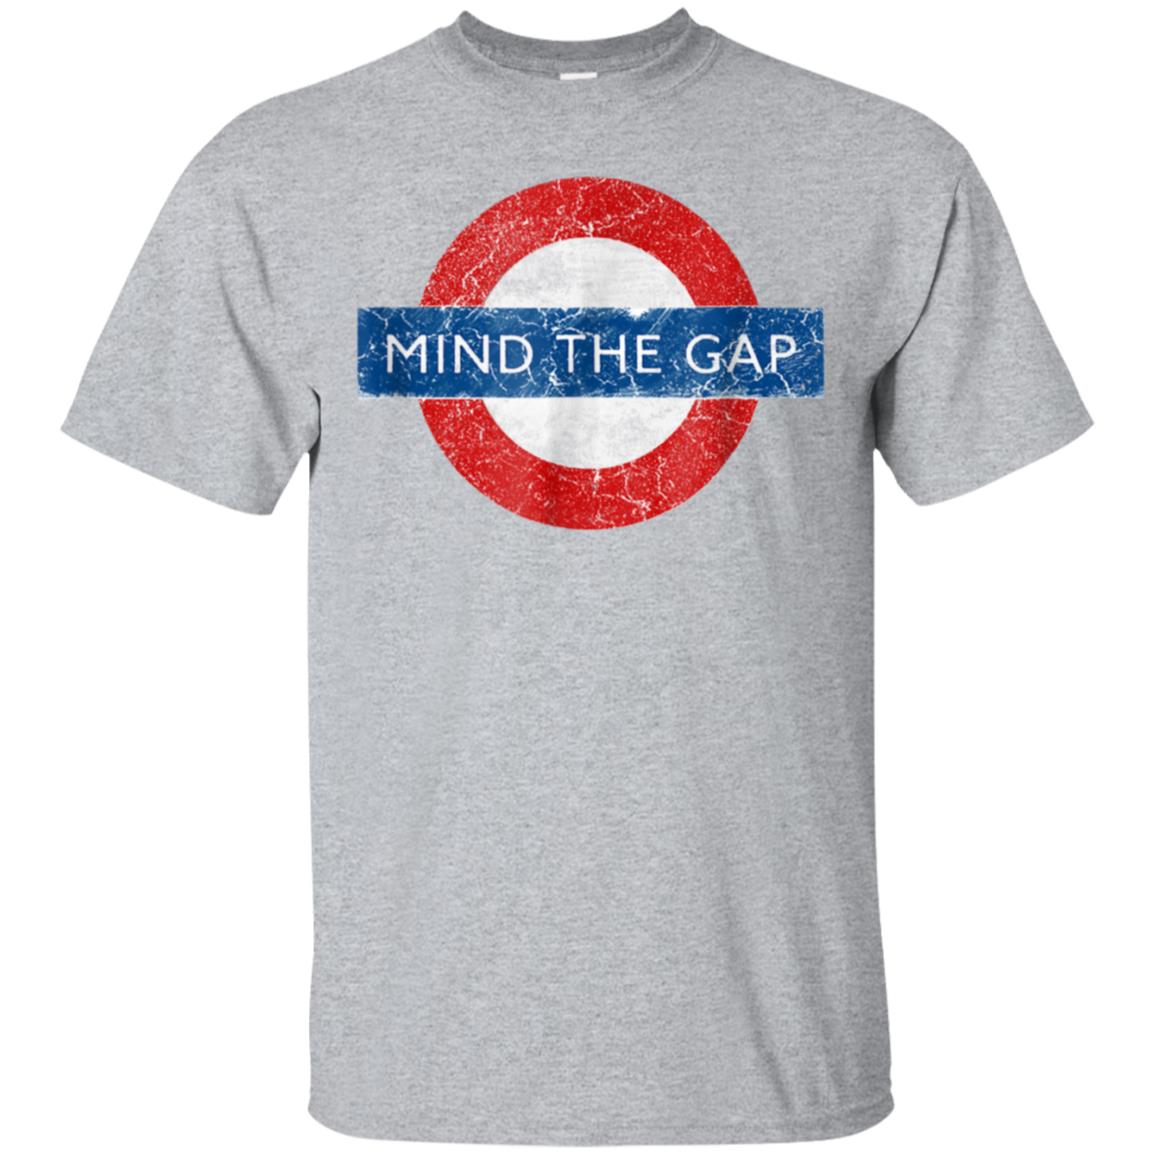 mind the gap shirt